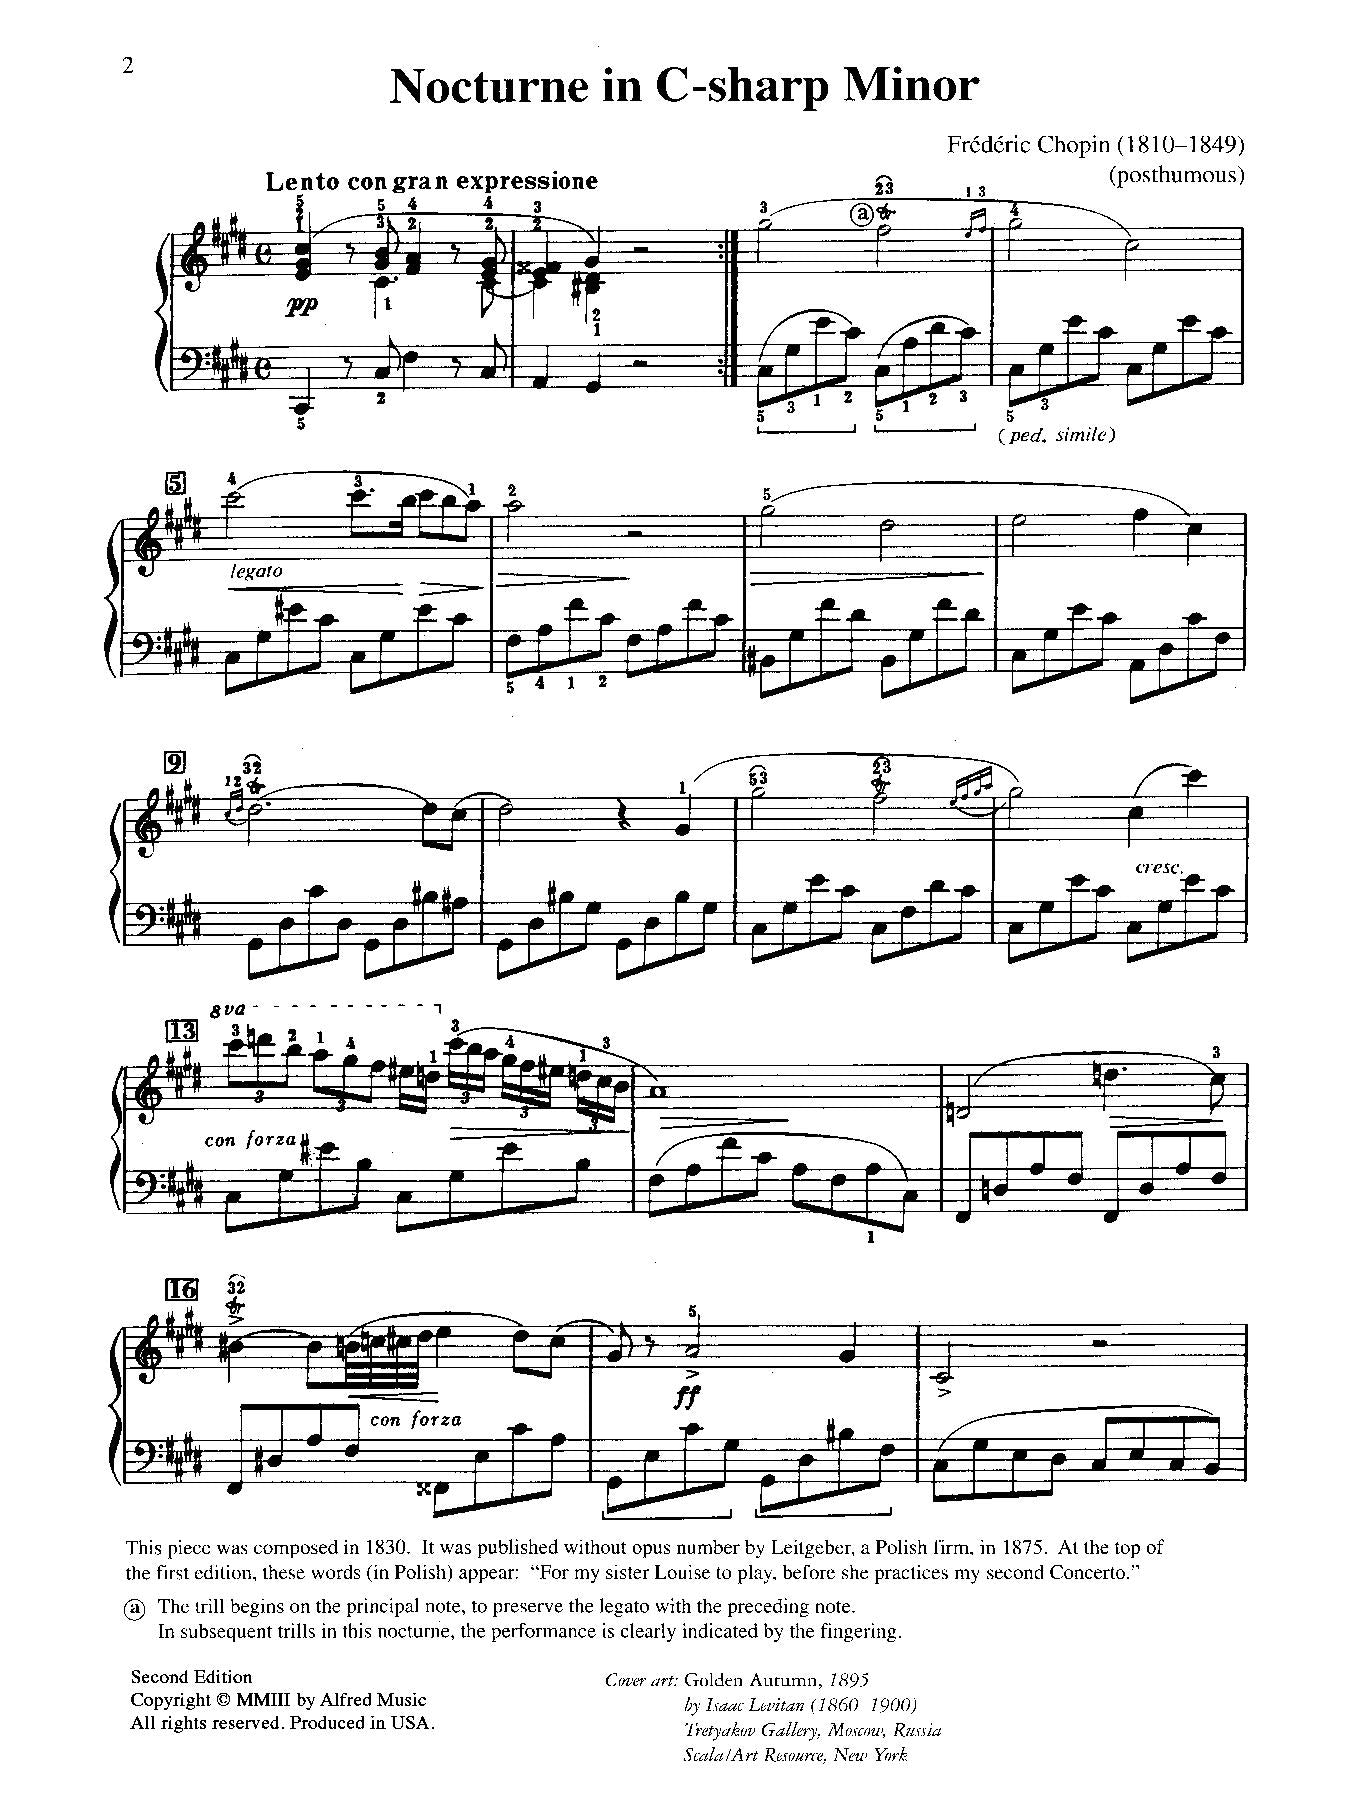 Chopin: Nocturne in C-sharp Minor (Posthumous)